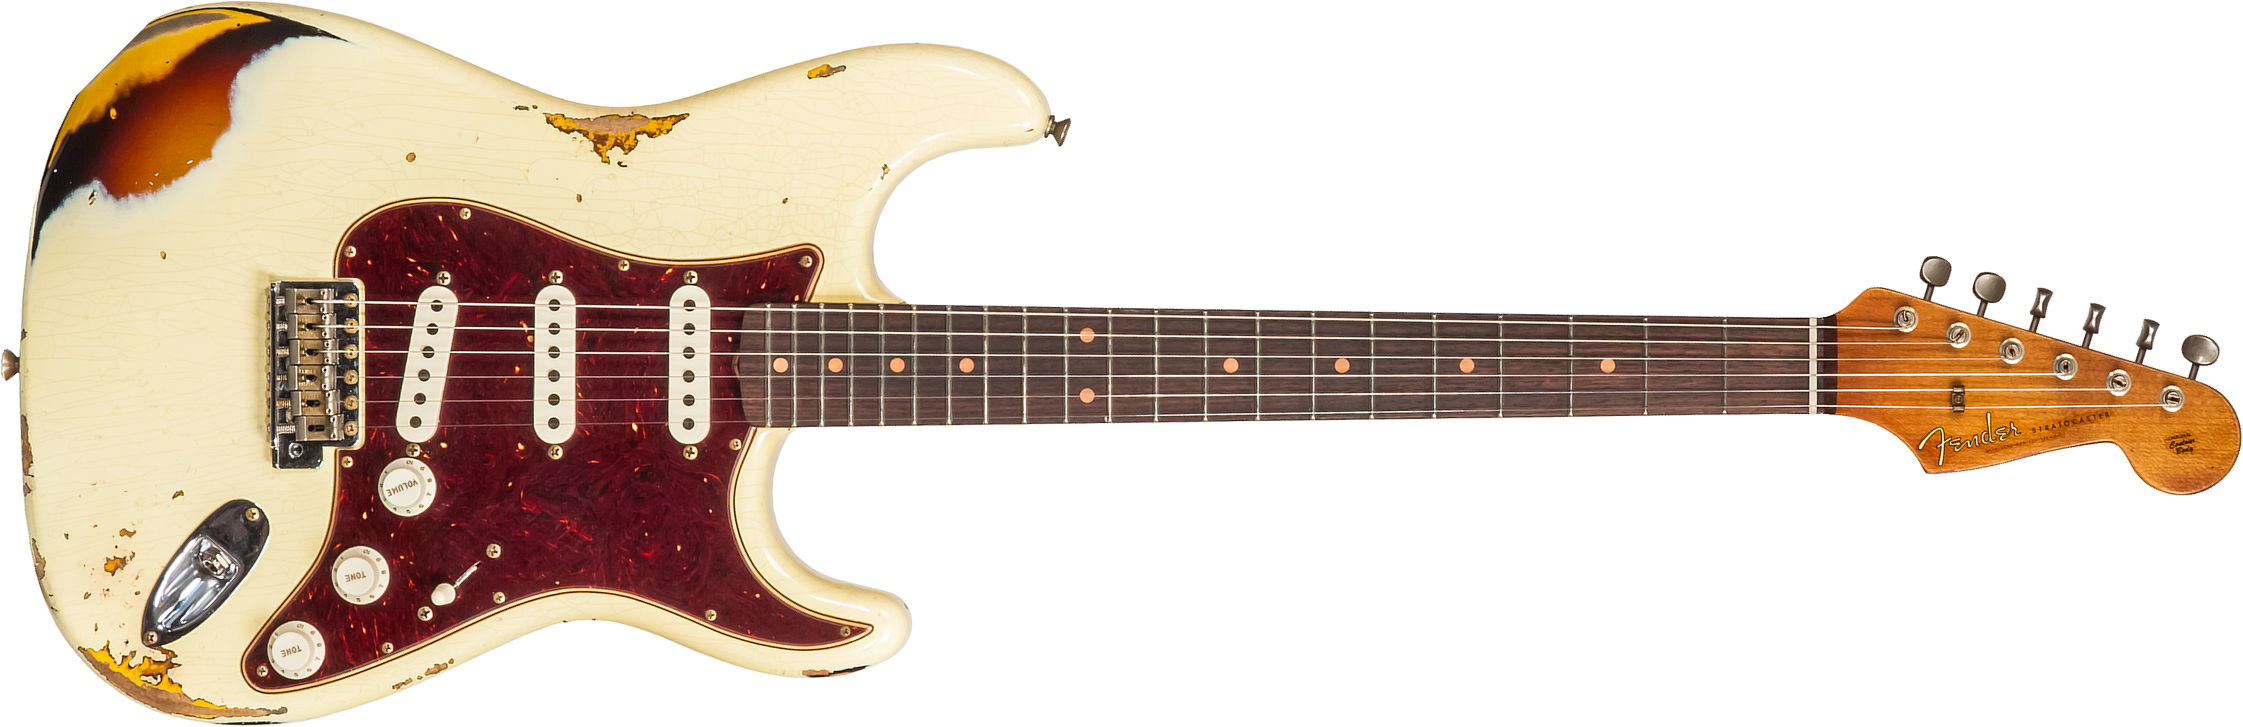 Plaque Fender Stratocaster précâblée Vintage Custom Shop 1961-65